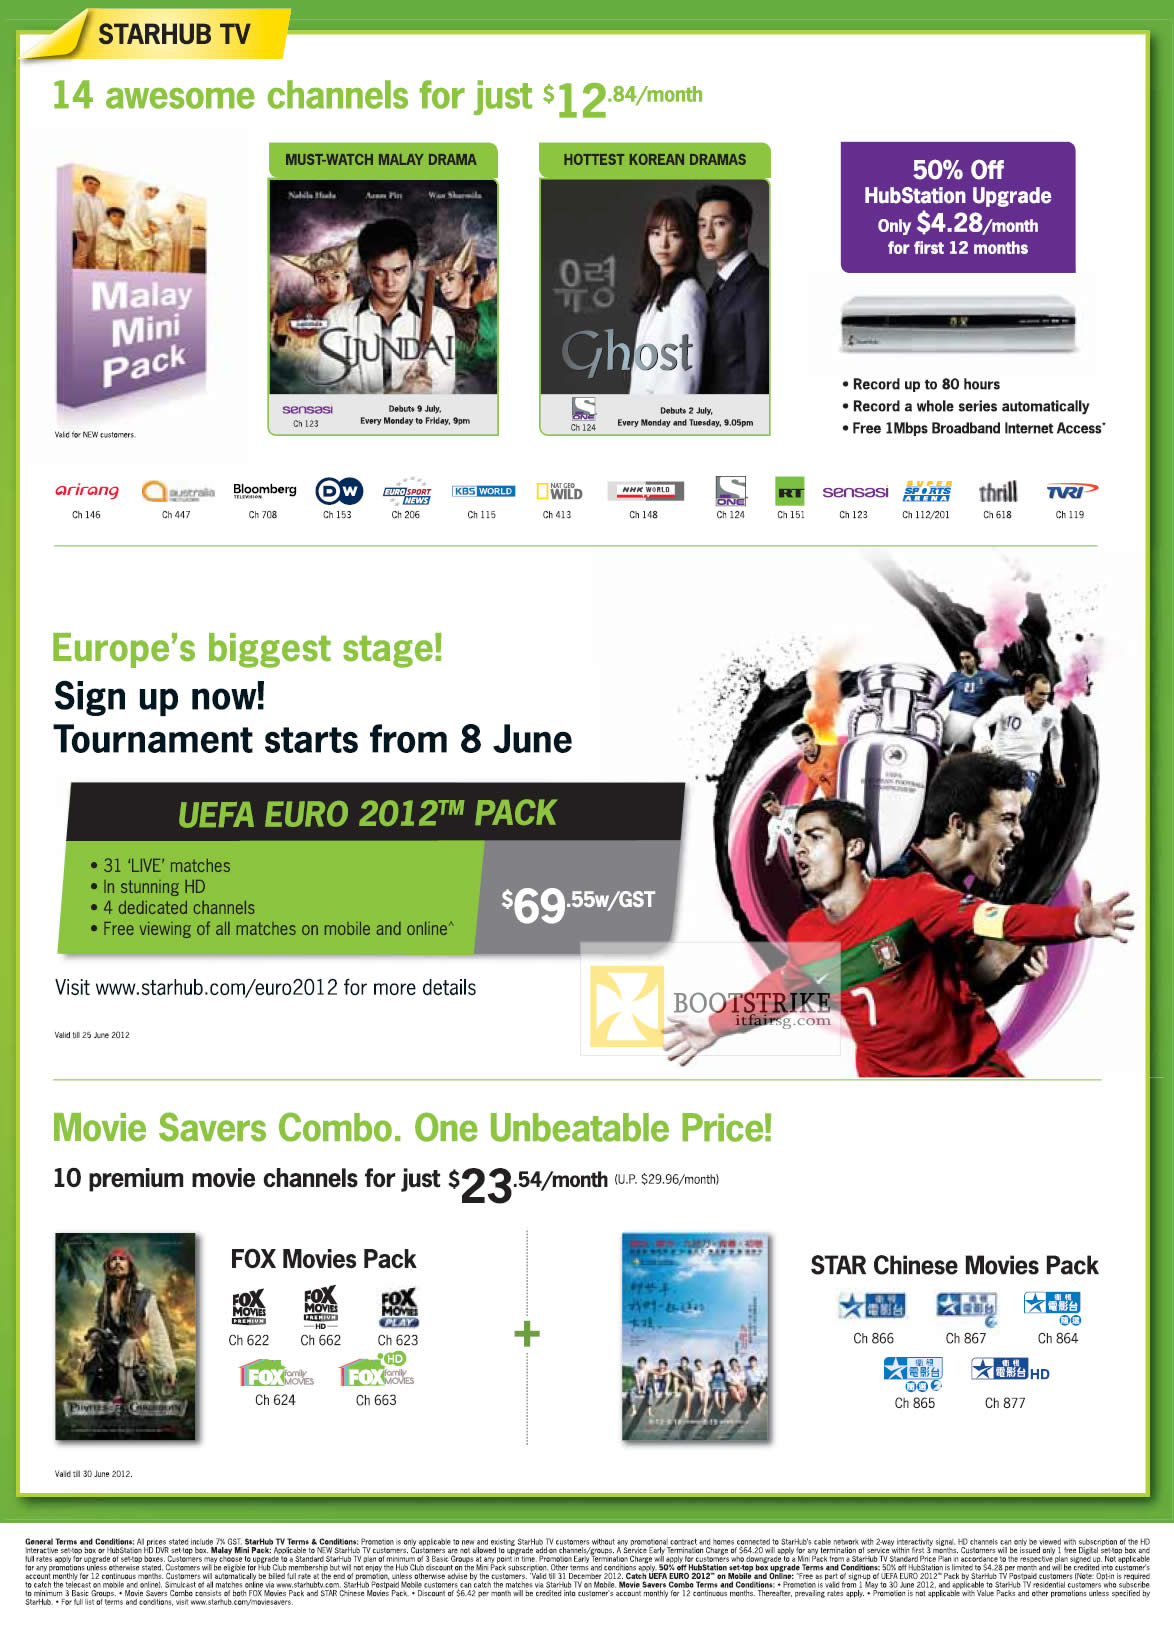 PC SHOW 2012 price list image brochure of Starhub TV Malay Mini Pack, UEFA Euro 2012 Pack, Fox Movies, Star Chinese Movies